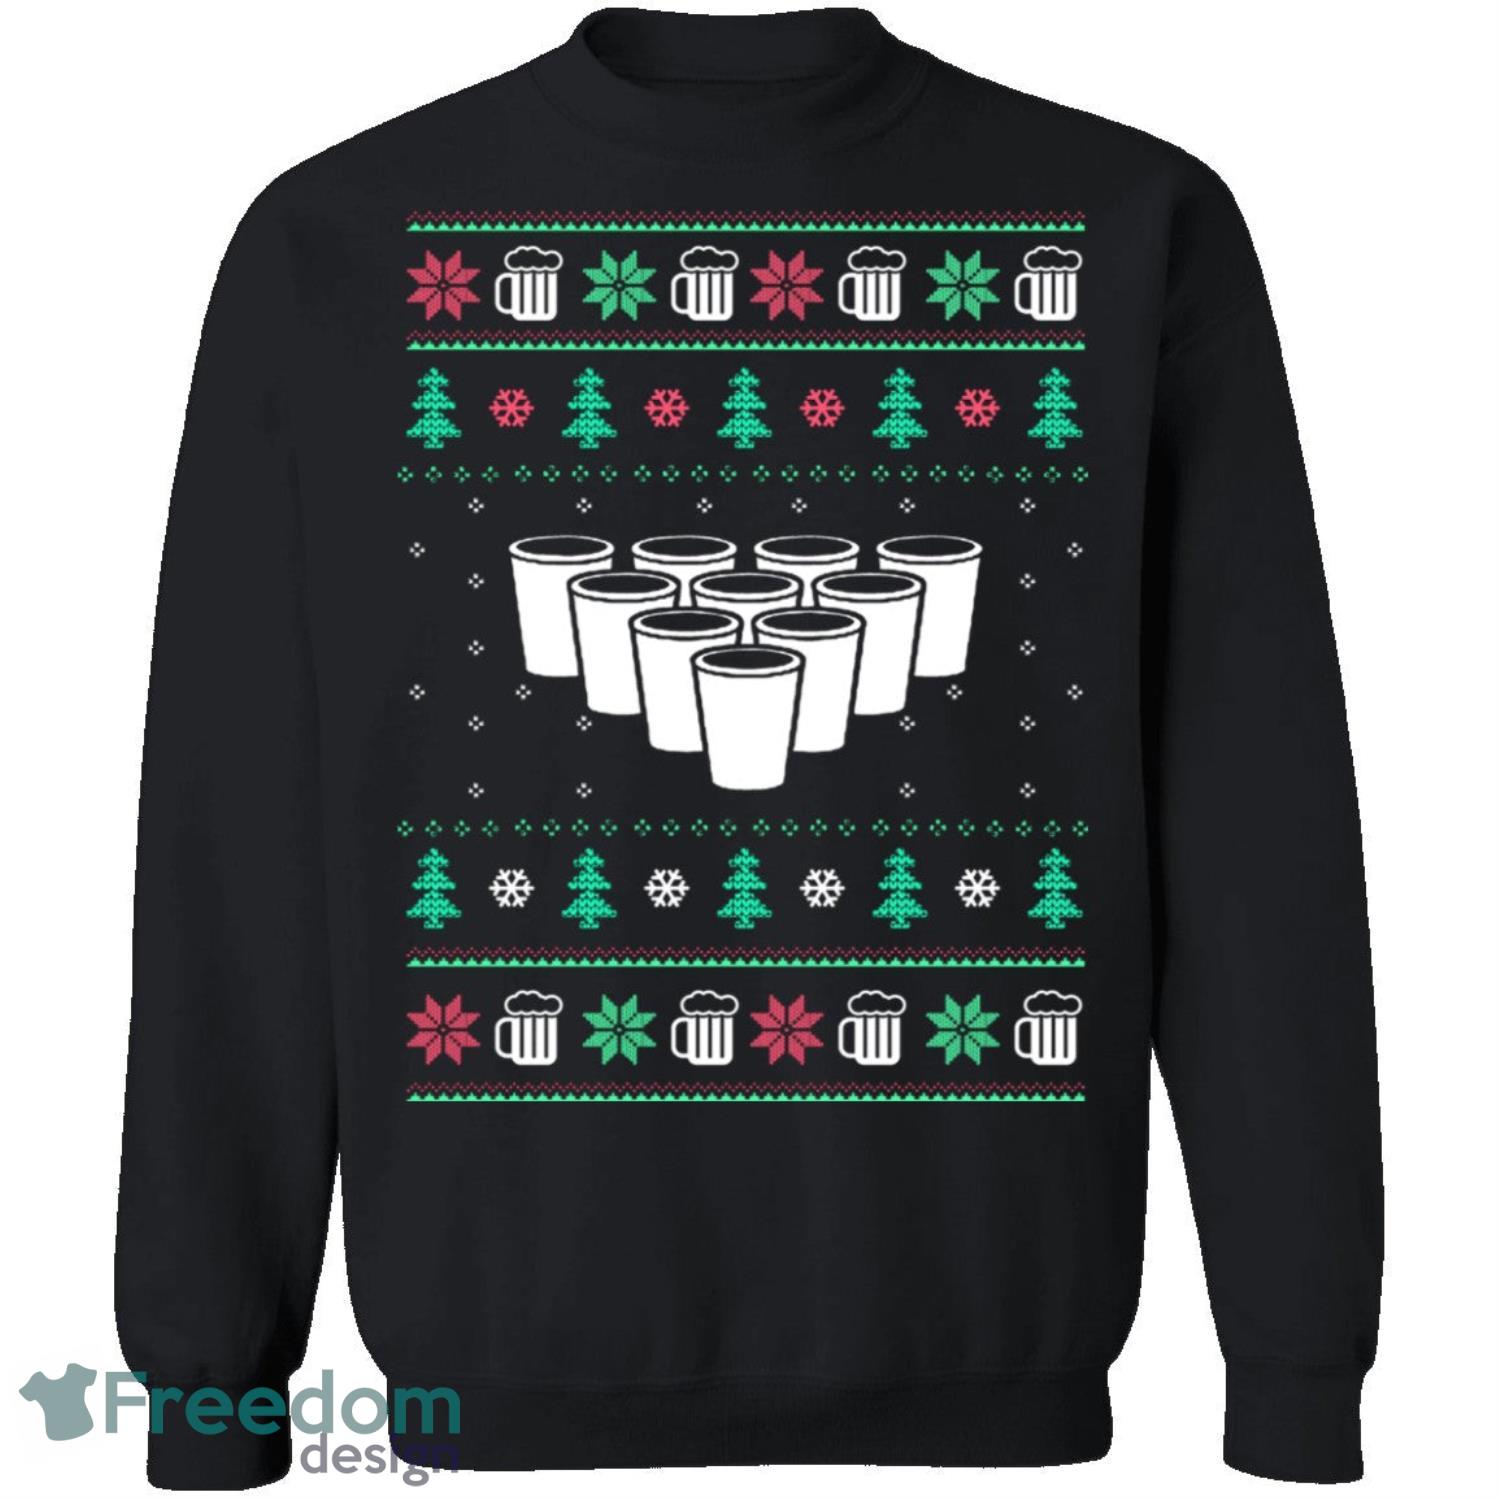 Beer Pong Knitting Pattern Ugly Christmas Sweatshirt - beer-pong-knitting-pattern-ugly-christmas-sweatshirt-2